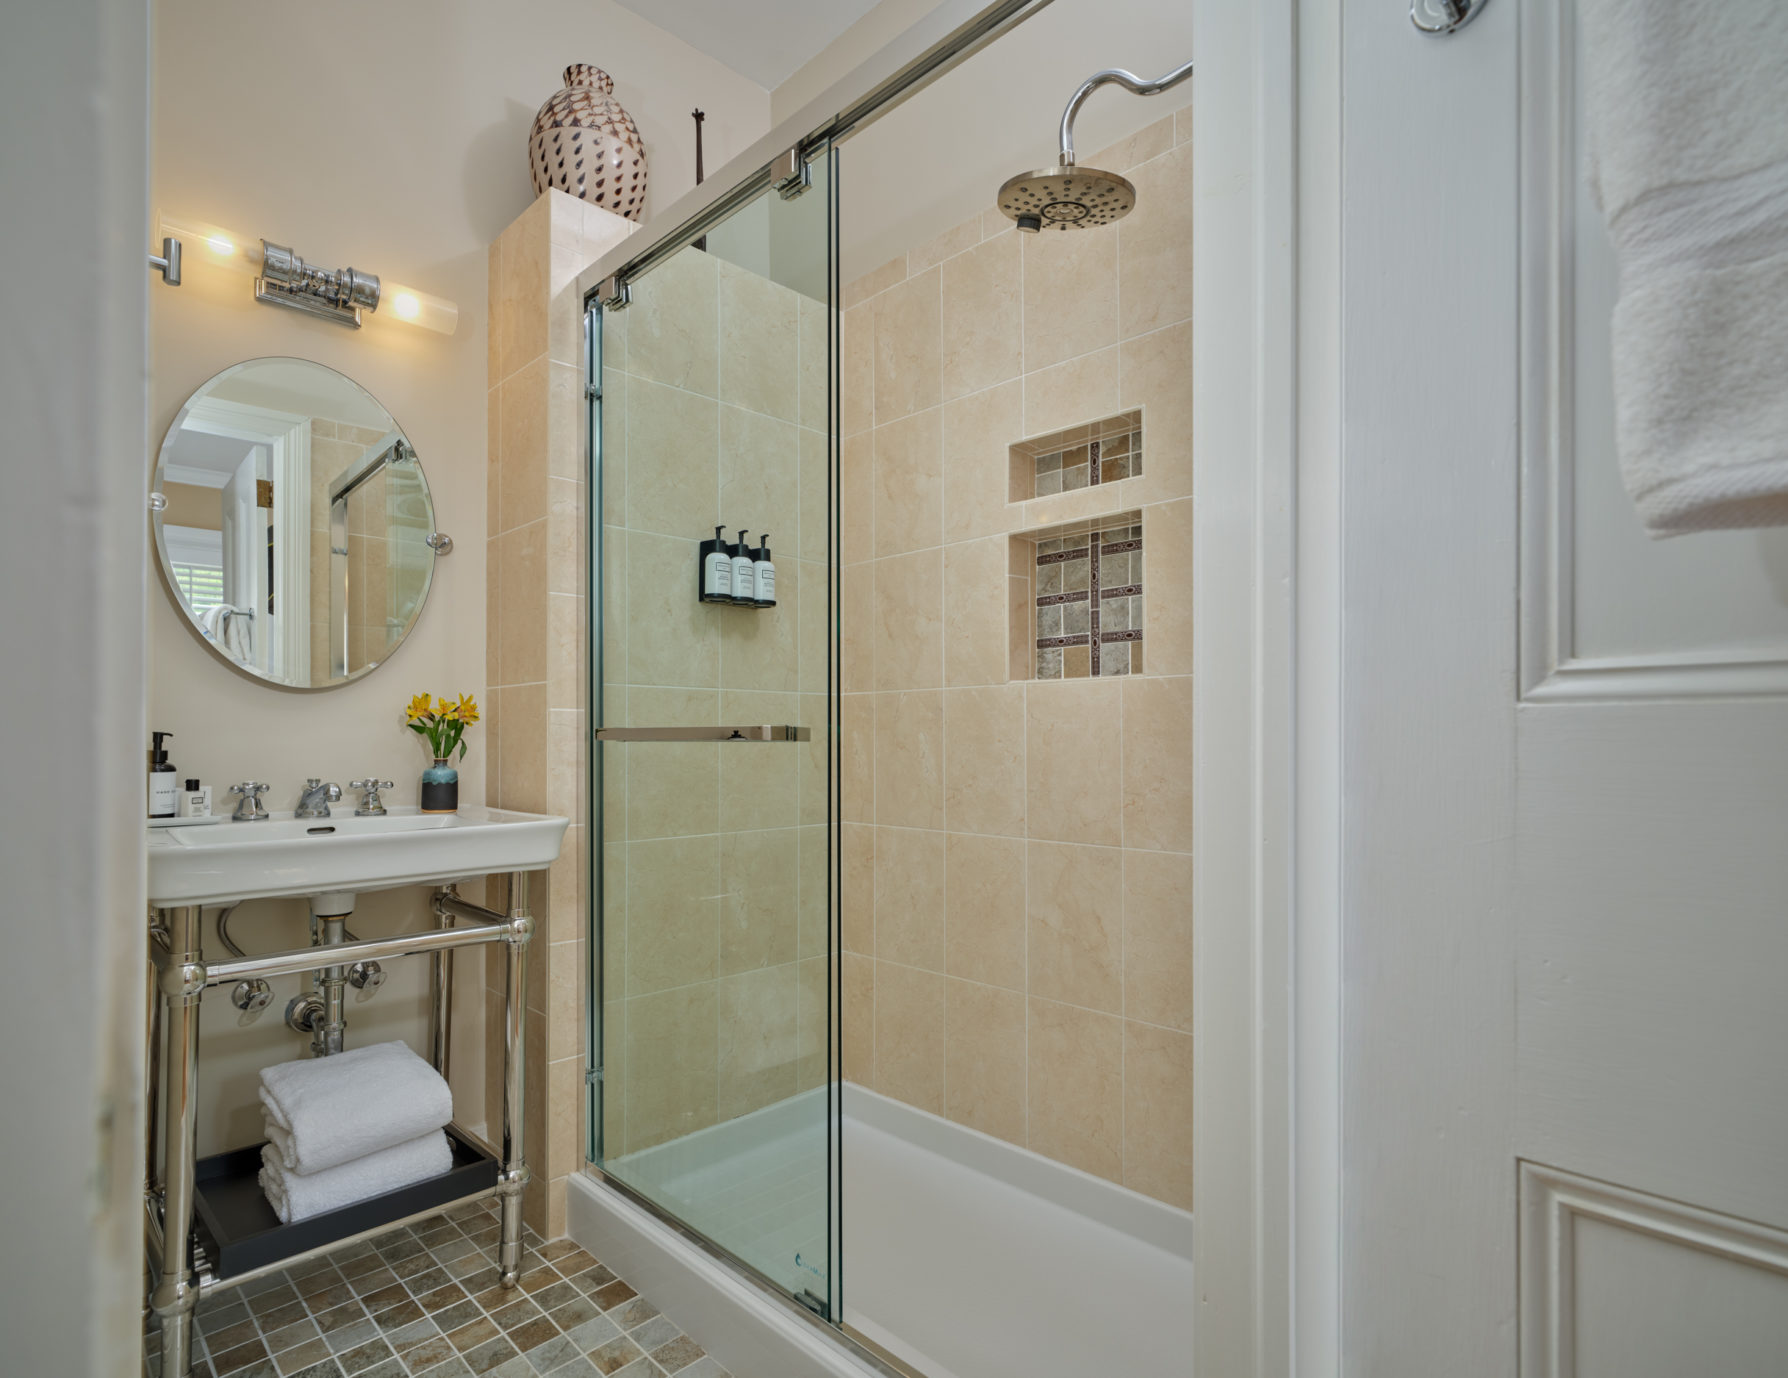 Pristine tile shower and bathroom